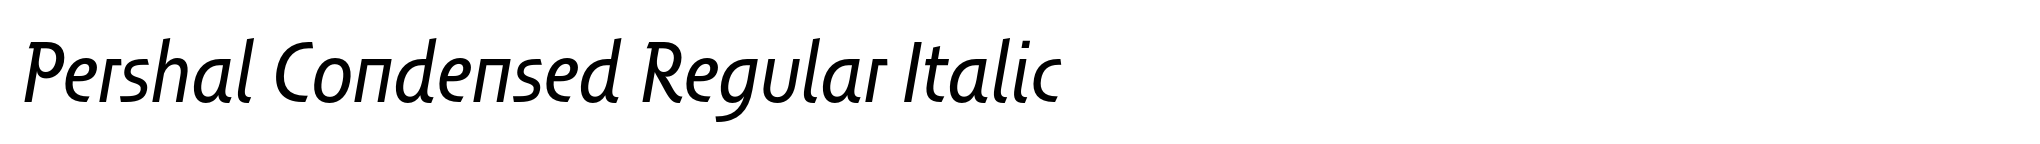 Pershal Condensed Regular Italic image